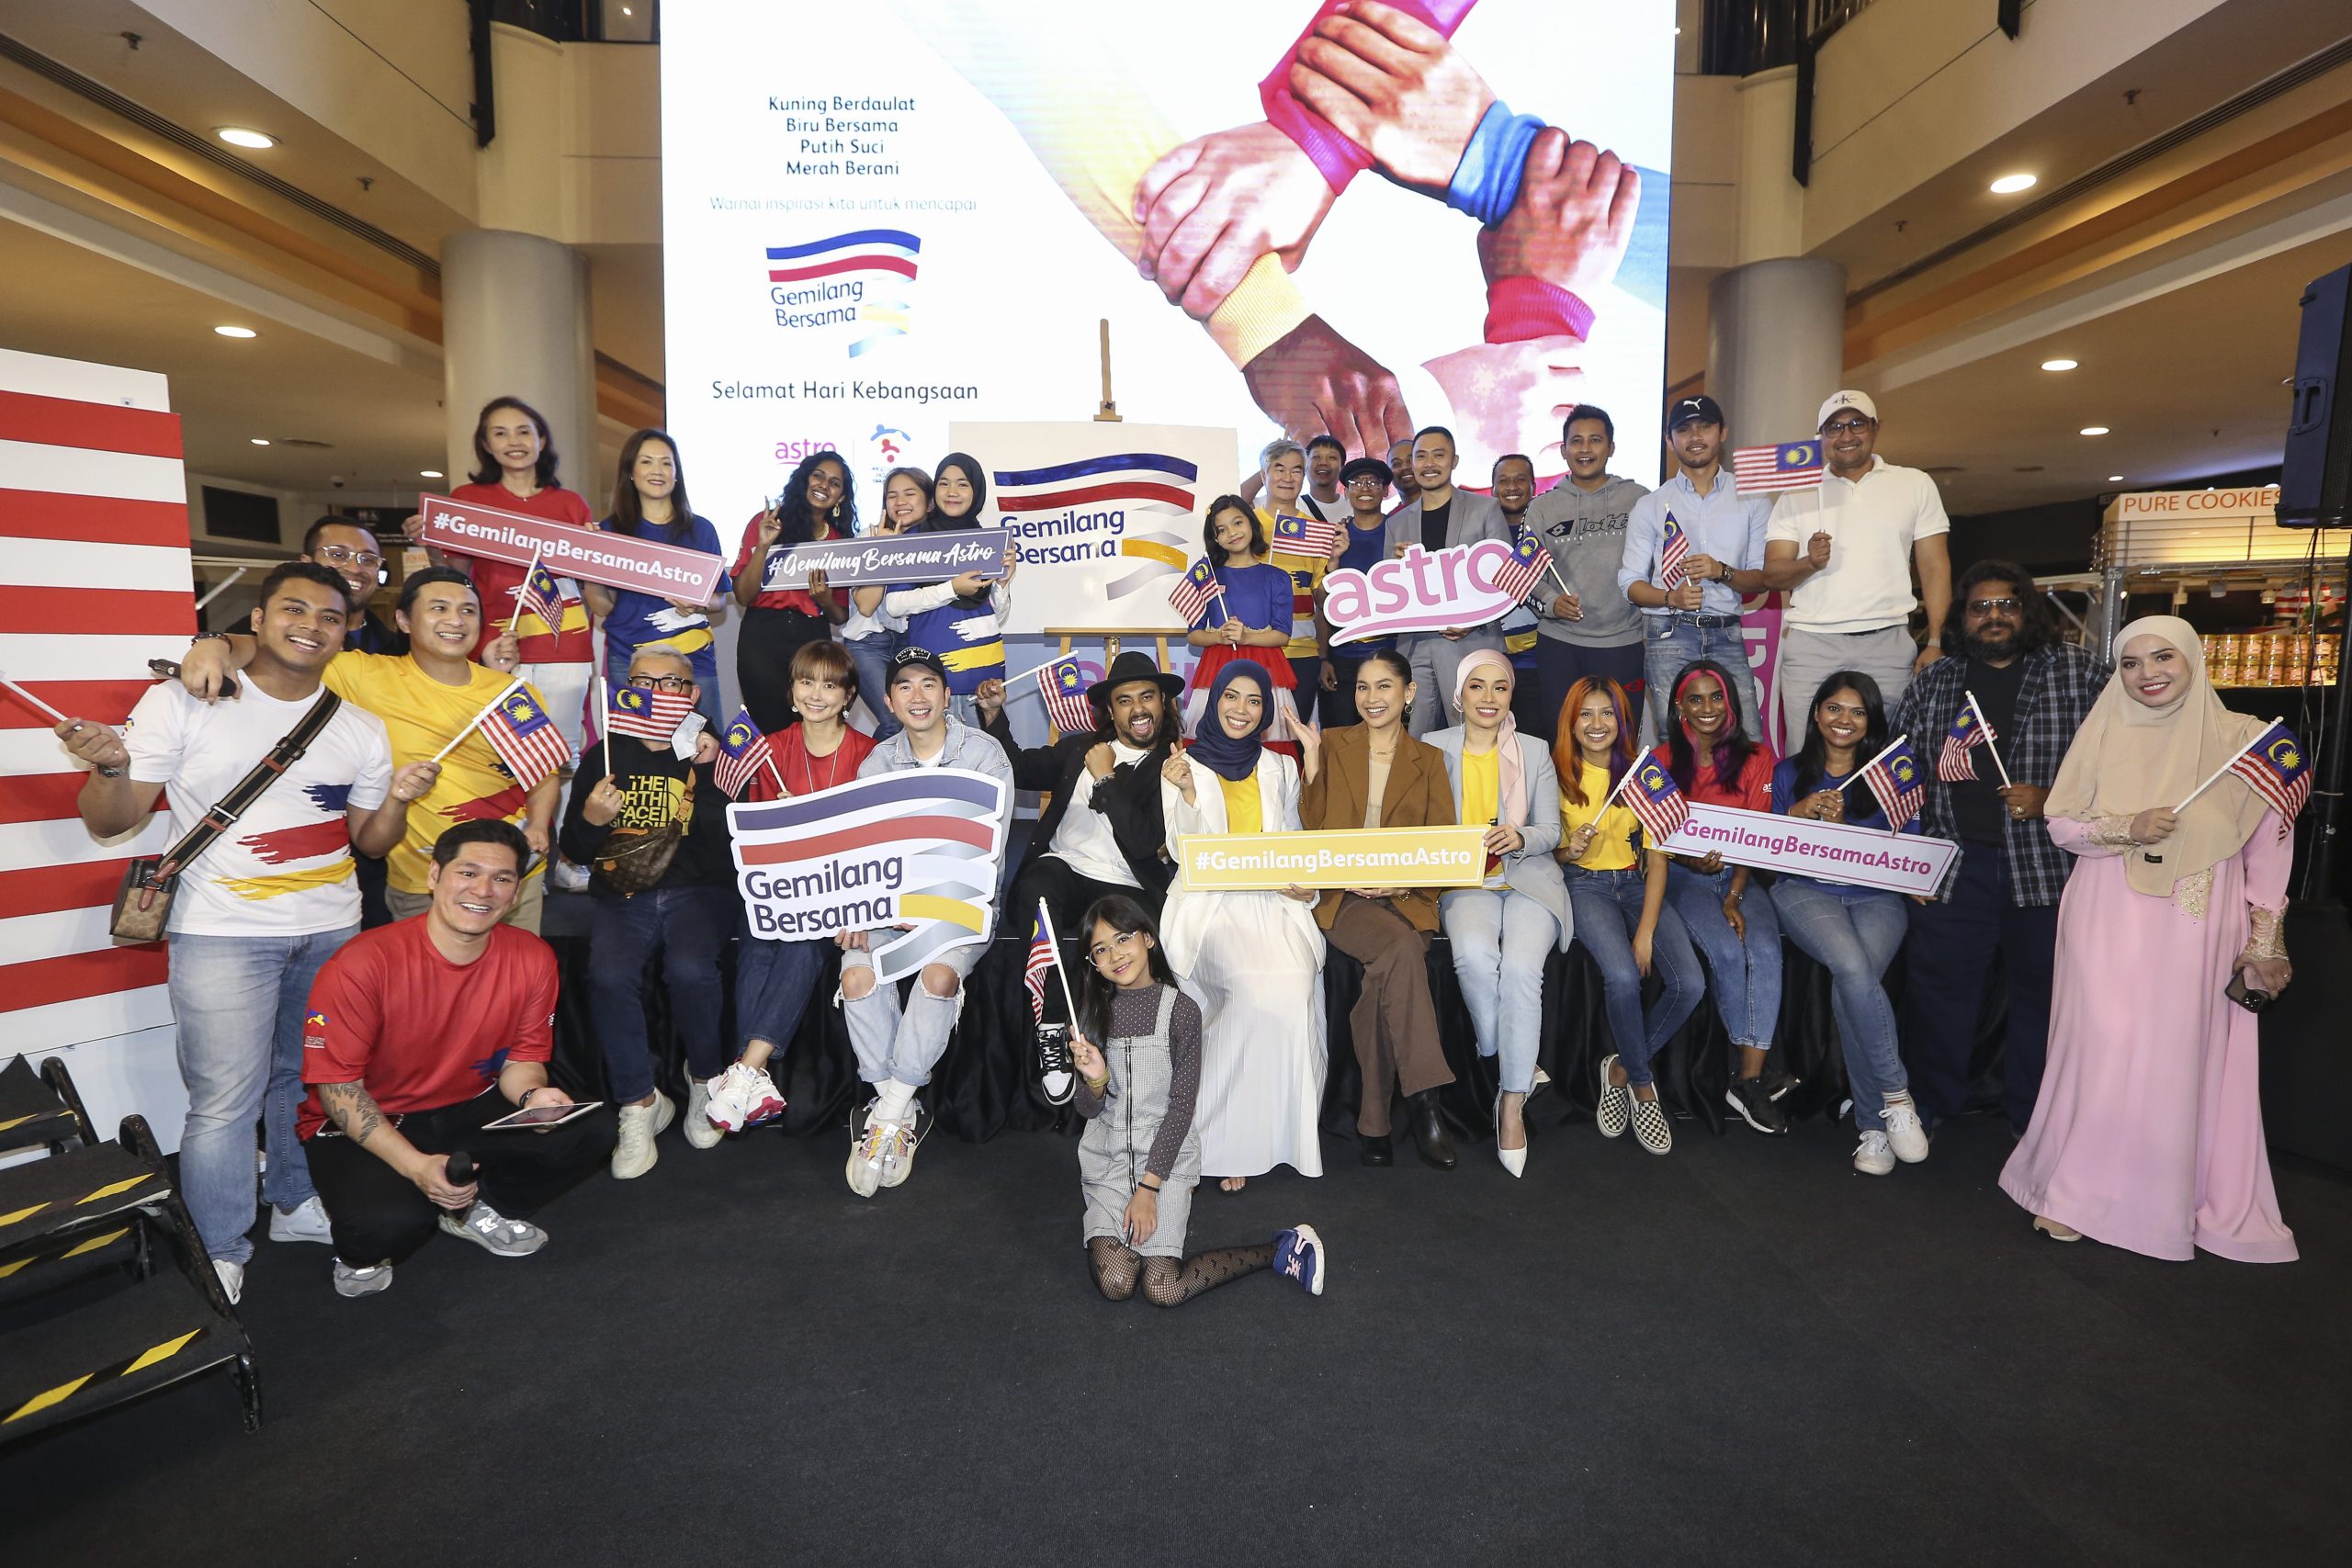 Astro国庆月免费开放150个节目  Gemilang Bersama激励各族团结